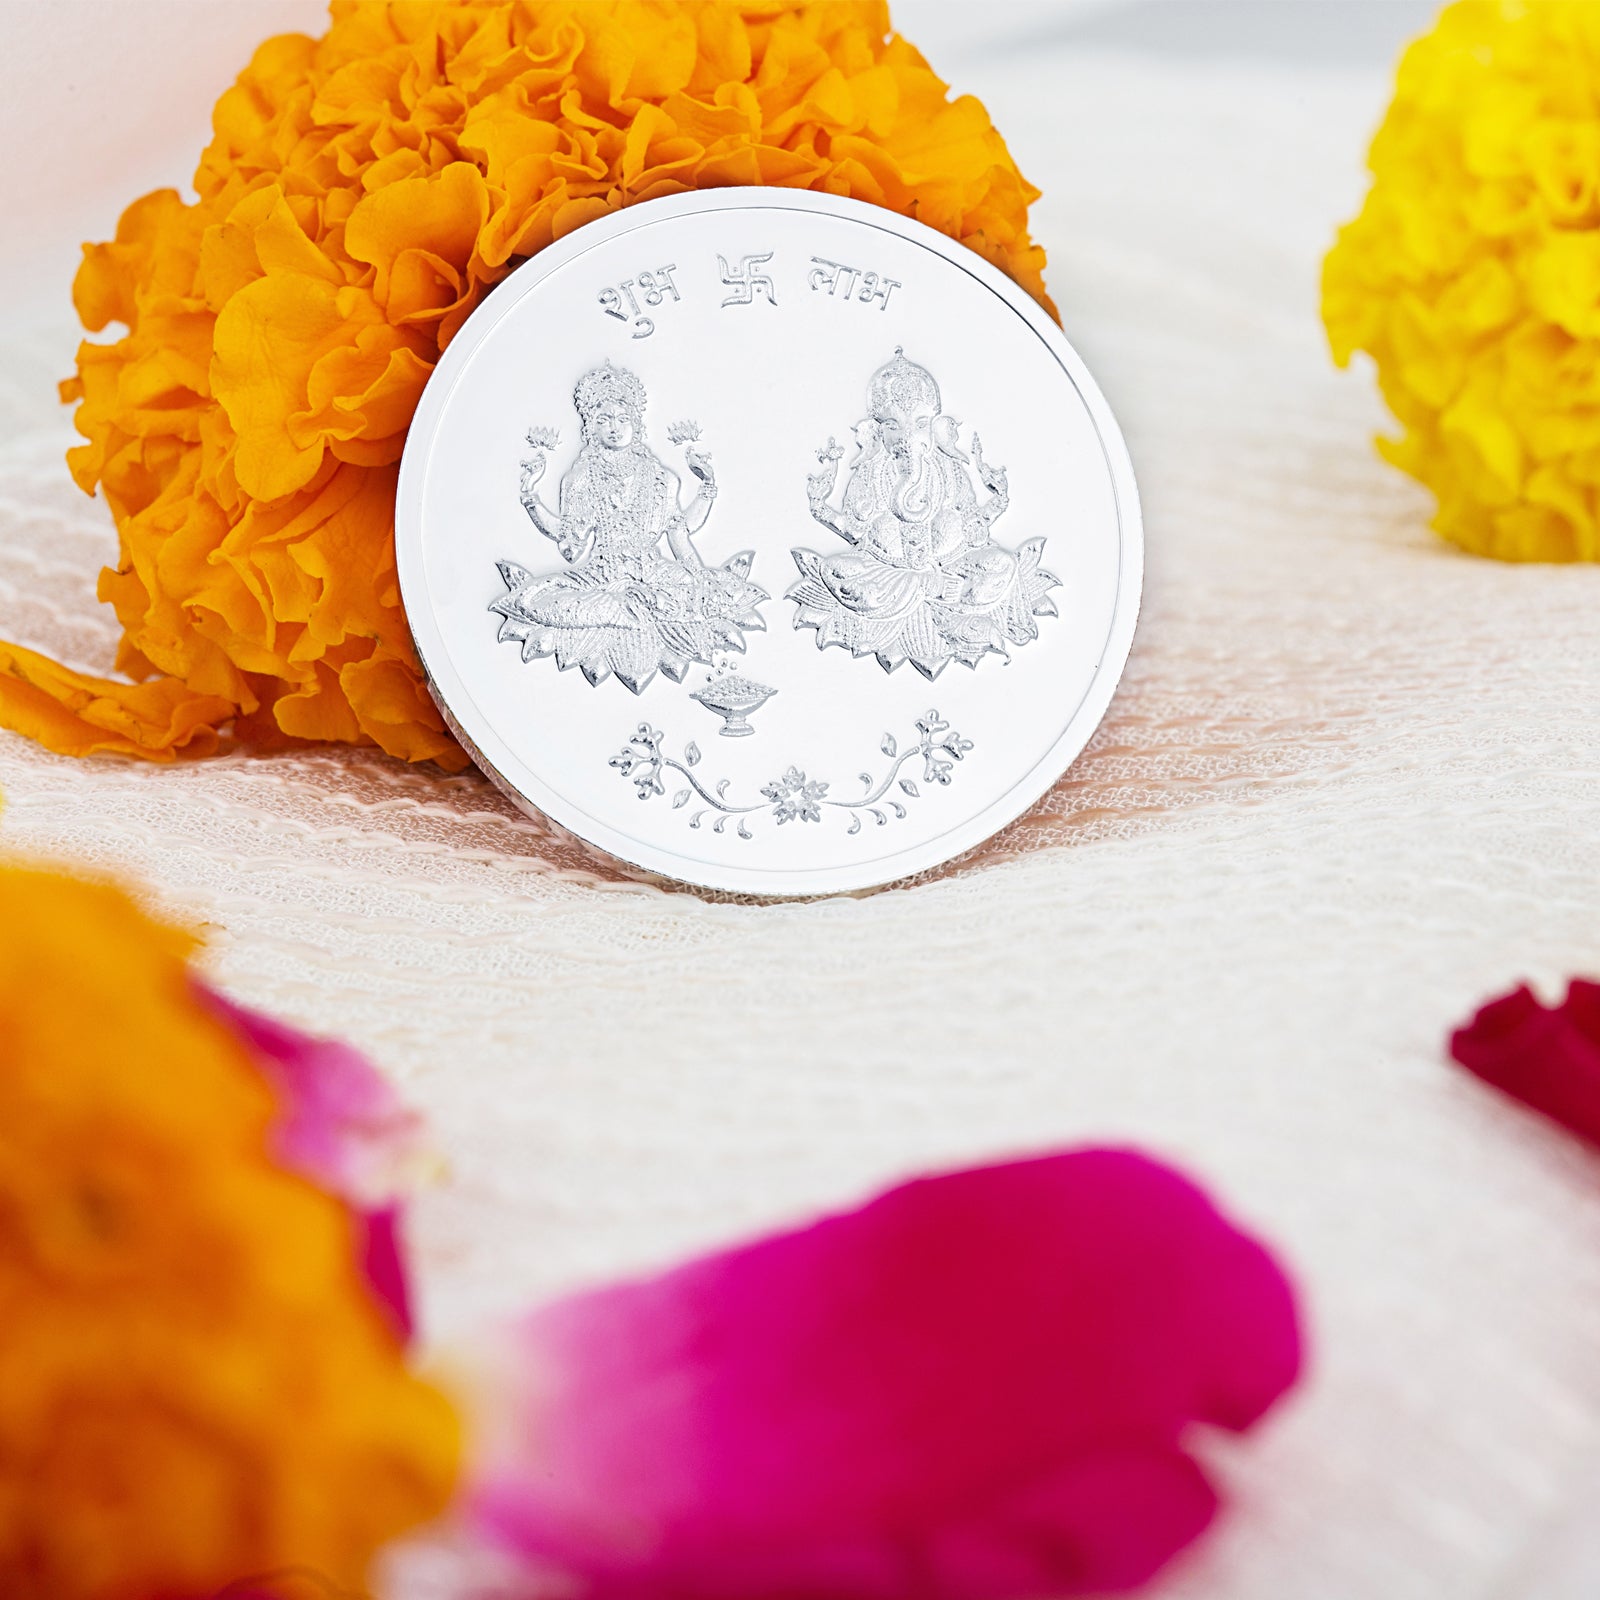 GOLDGIFTIDEAS Pure Silver 999 Lakshmi Ganesha Saraswati Coin, Silver Coin  for Wedding Gift